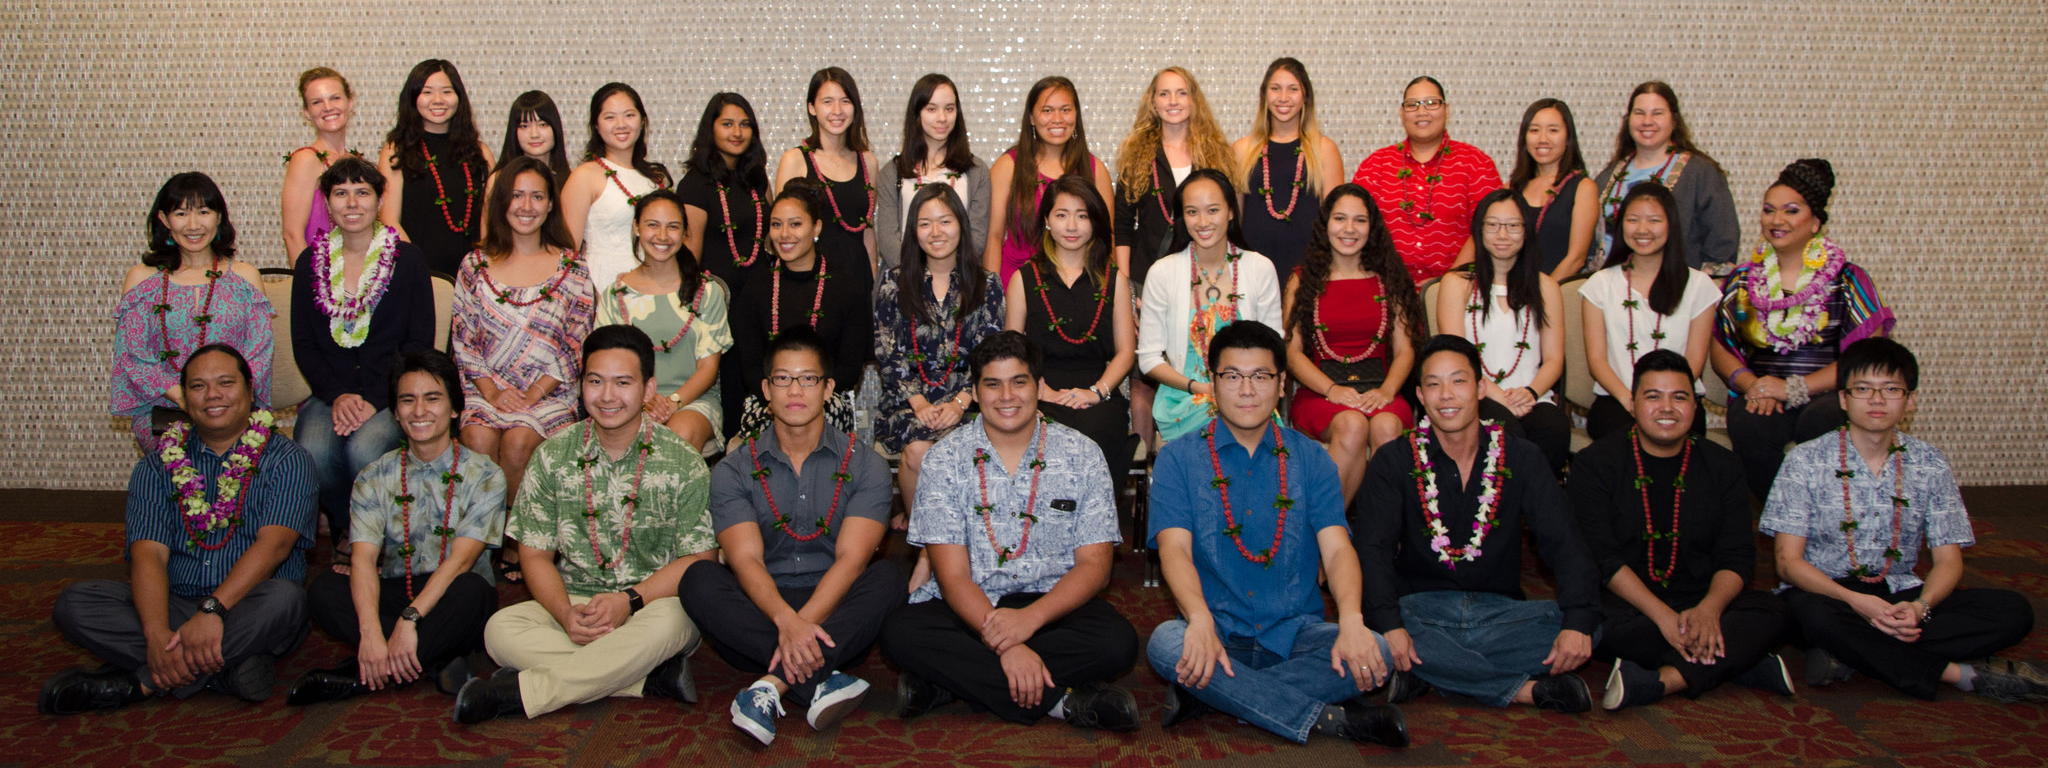 2017 Scholarship Recipients at CTAHR's Annual Awards Banquet